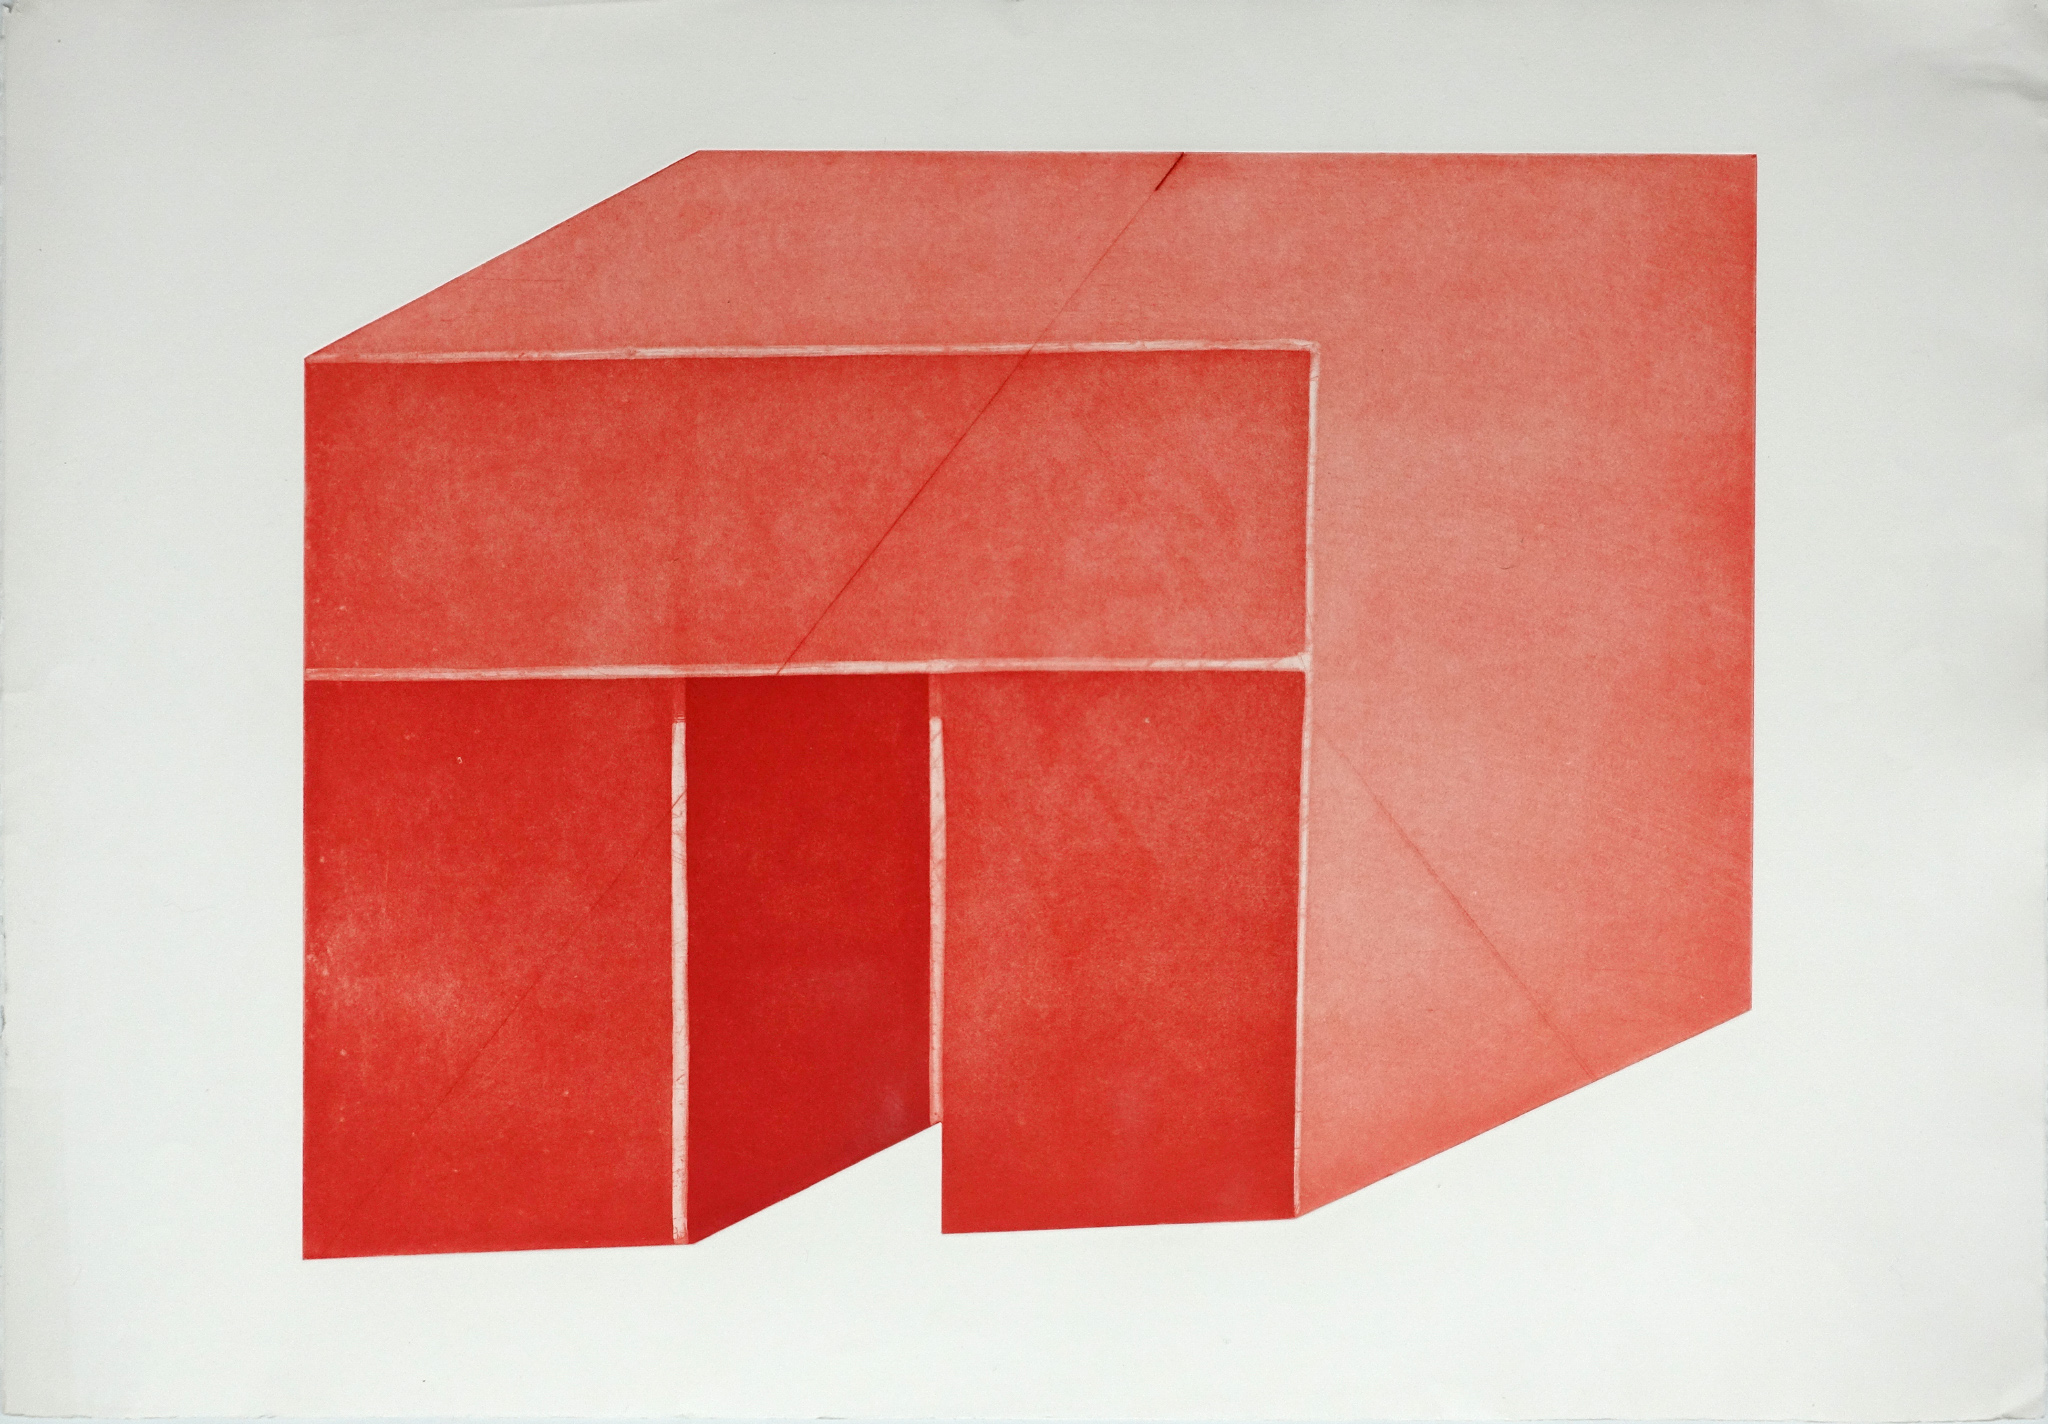 cubo rosso, 2020, aquatinta, 60 x 40 cm